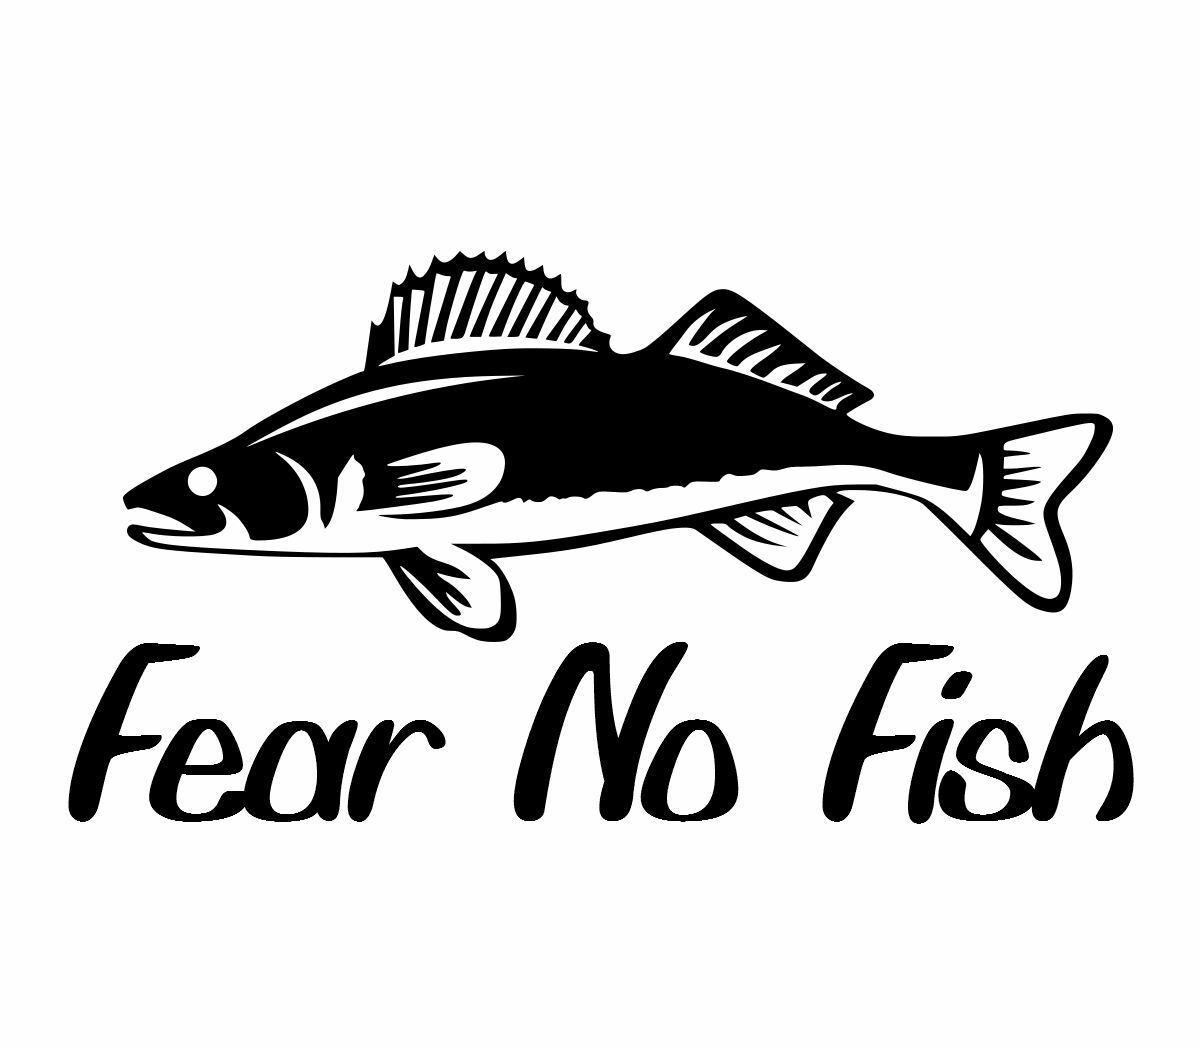 Fear no fish walleye vinyl decal fish car truck boat bumper window sticker